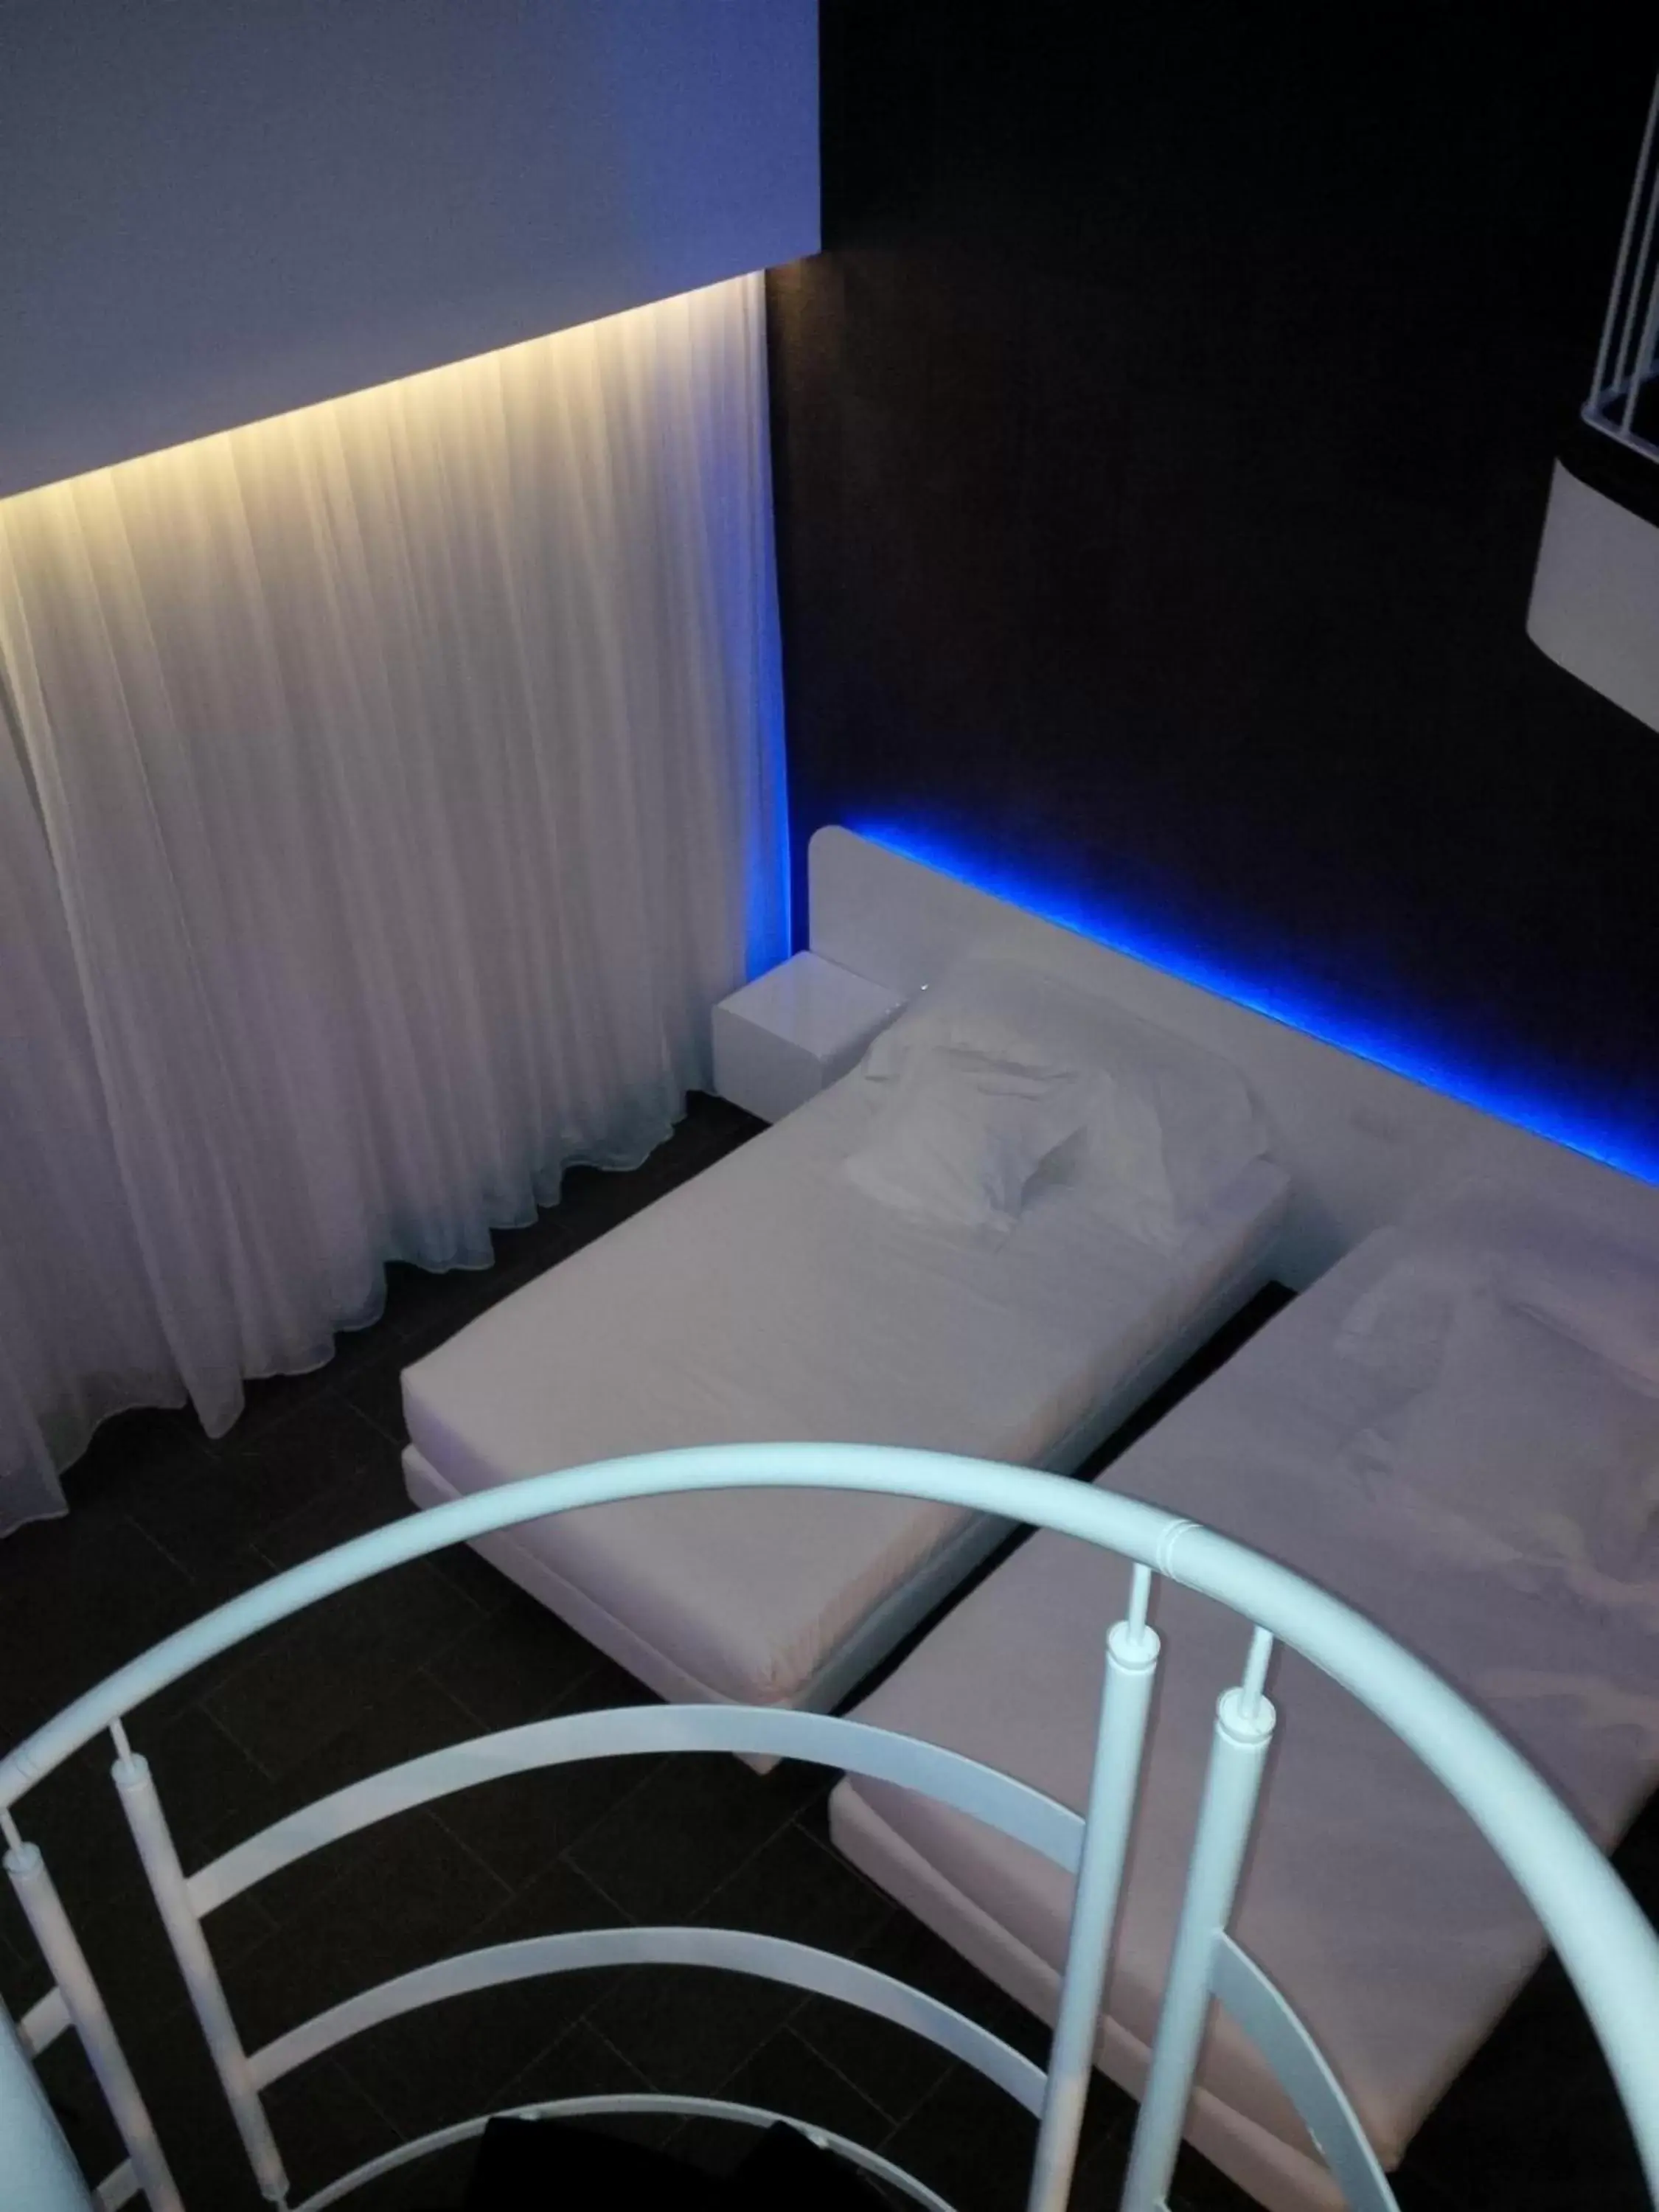 Bed in A Point Porto Ercole Resort & Spa